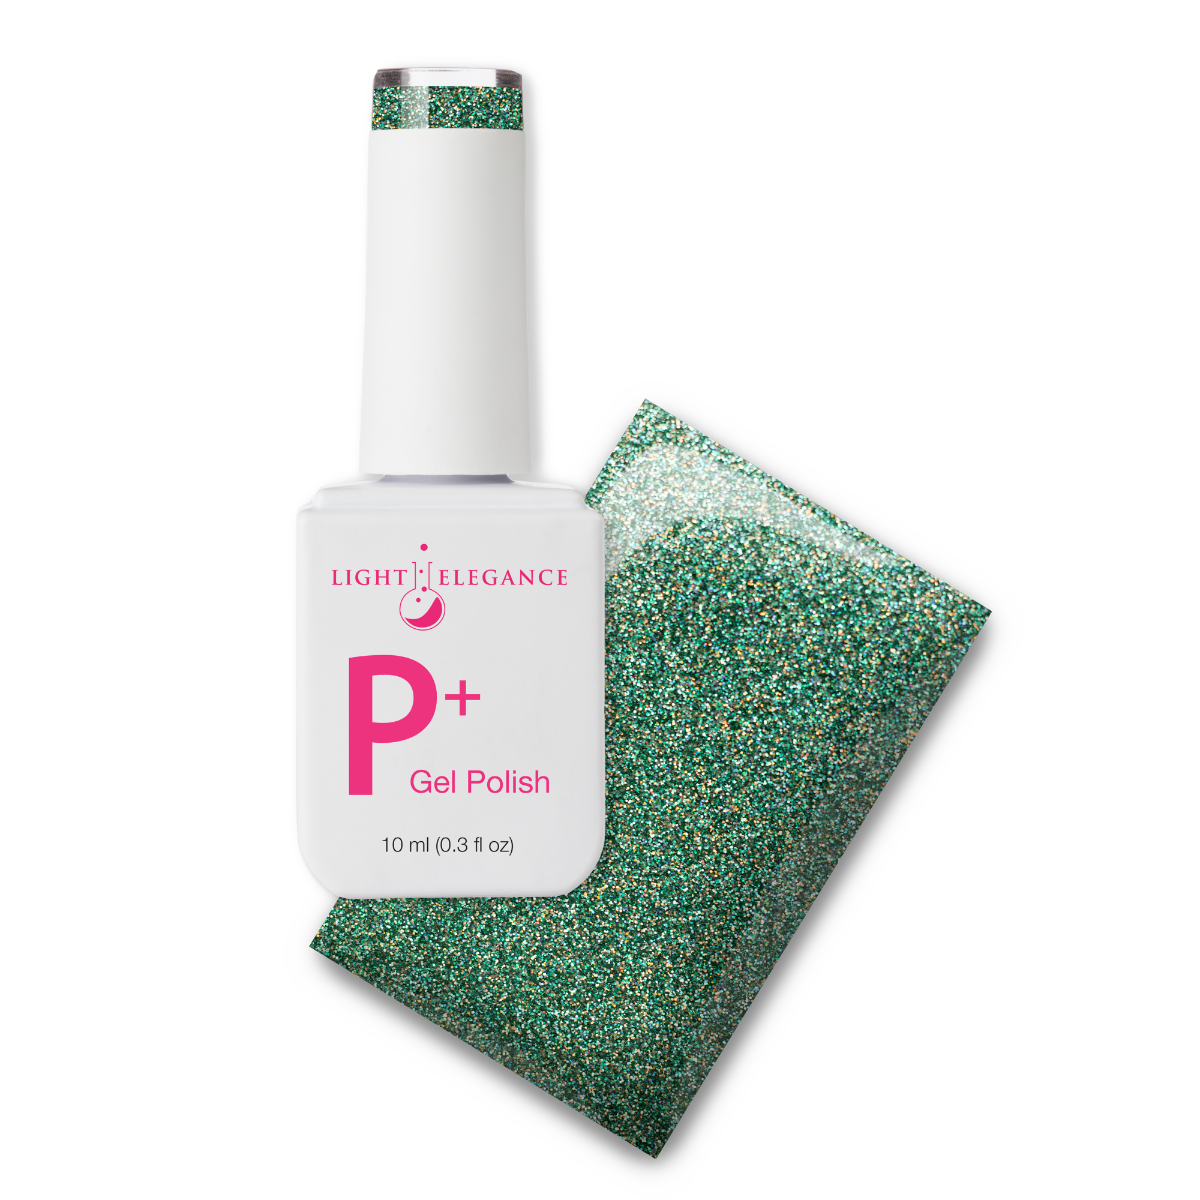 Light Elegance P+ Soak Off Glitter Gel - Bravo! :: New Packaging - Creata Beauty - Professional Beauty Products